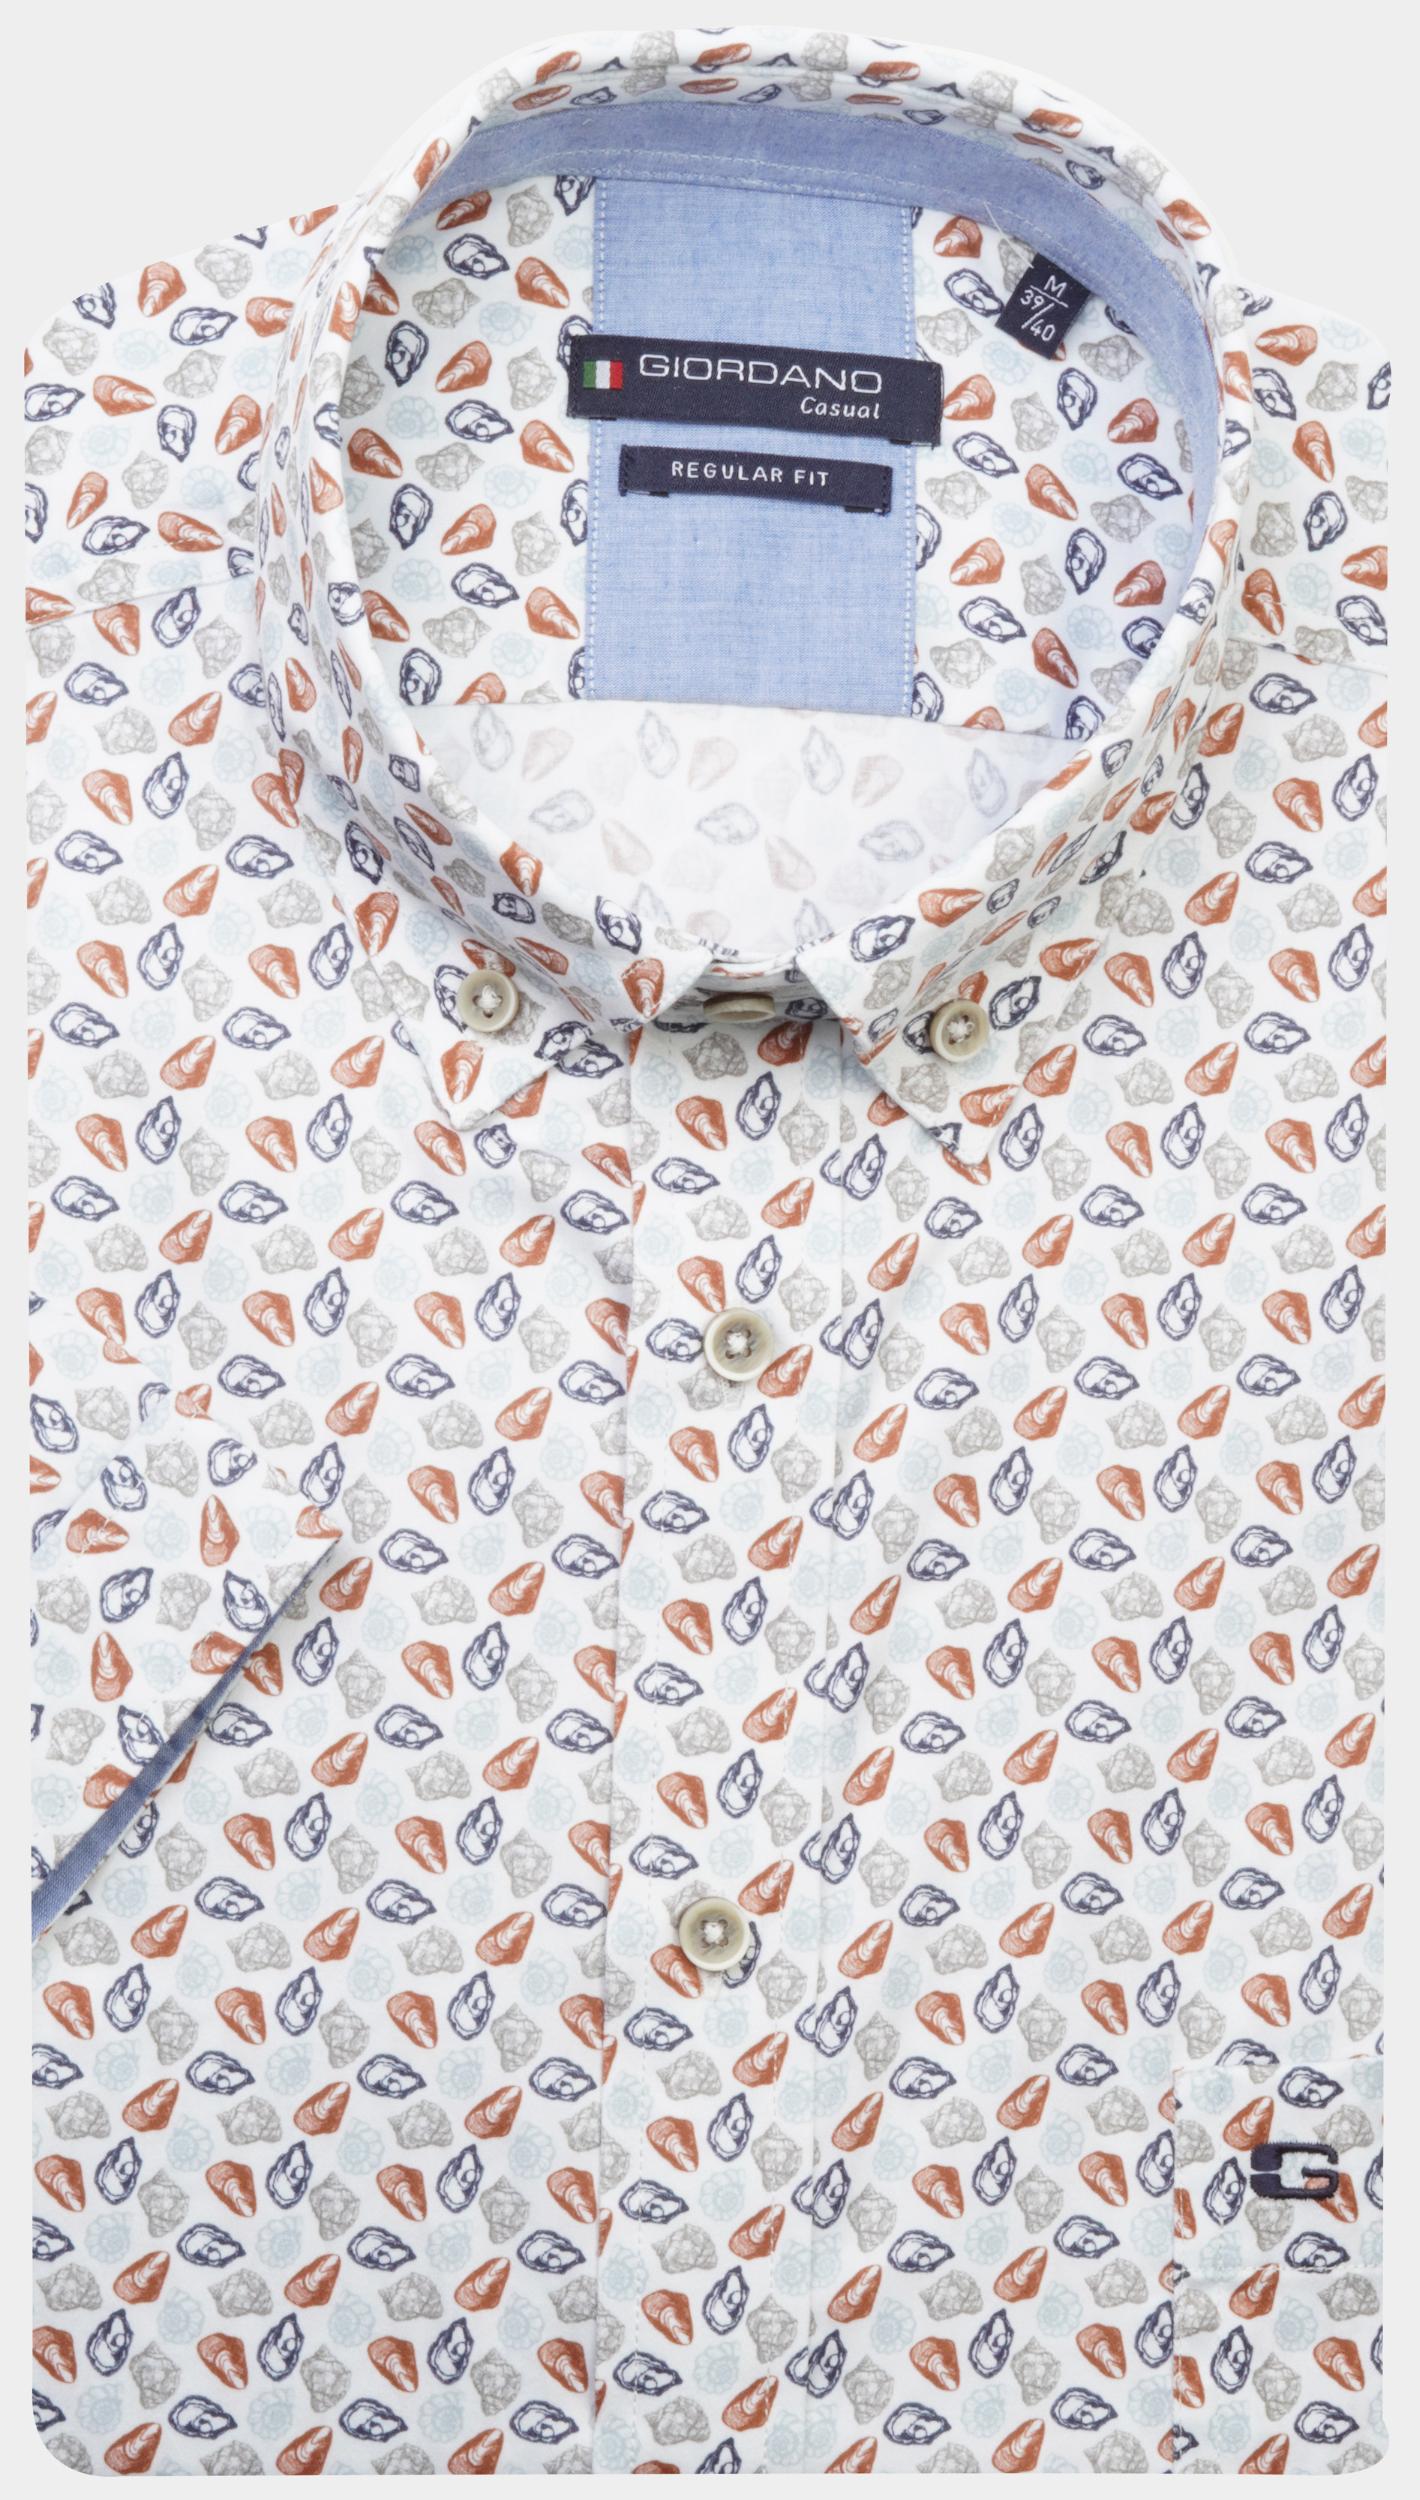 Giordano Casual hemd korte mouw Bruin League Shells Print 416027/80